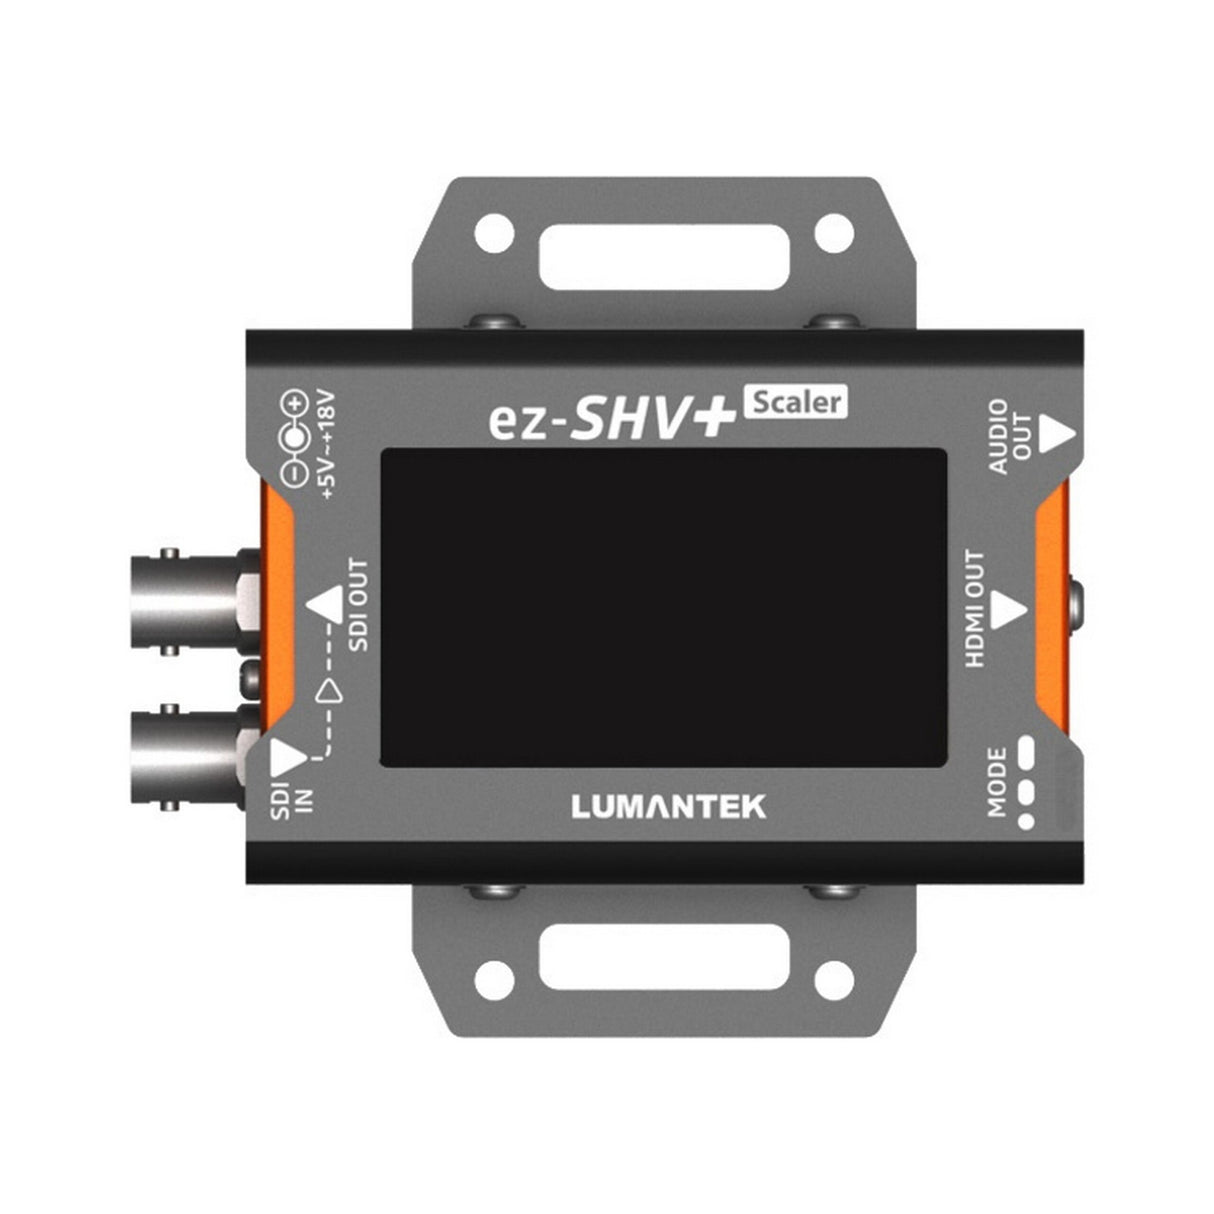 Lumantek ez-SHV+ SDI to HDMI Converter with Display and Scaler